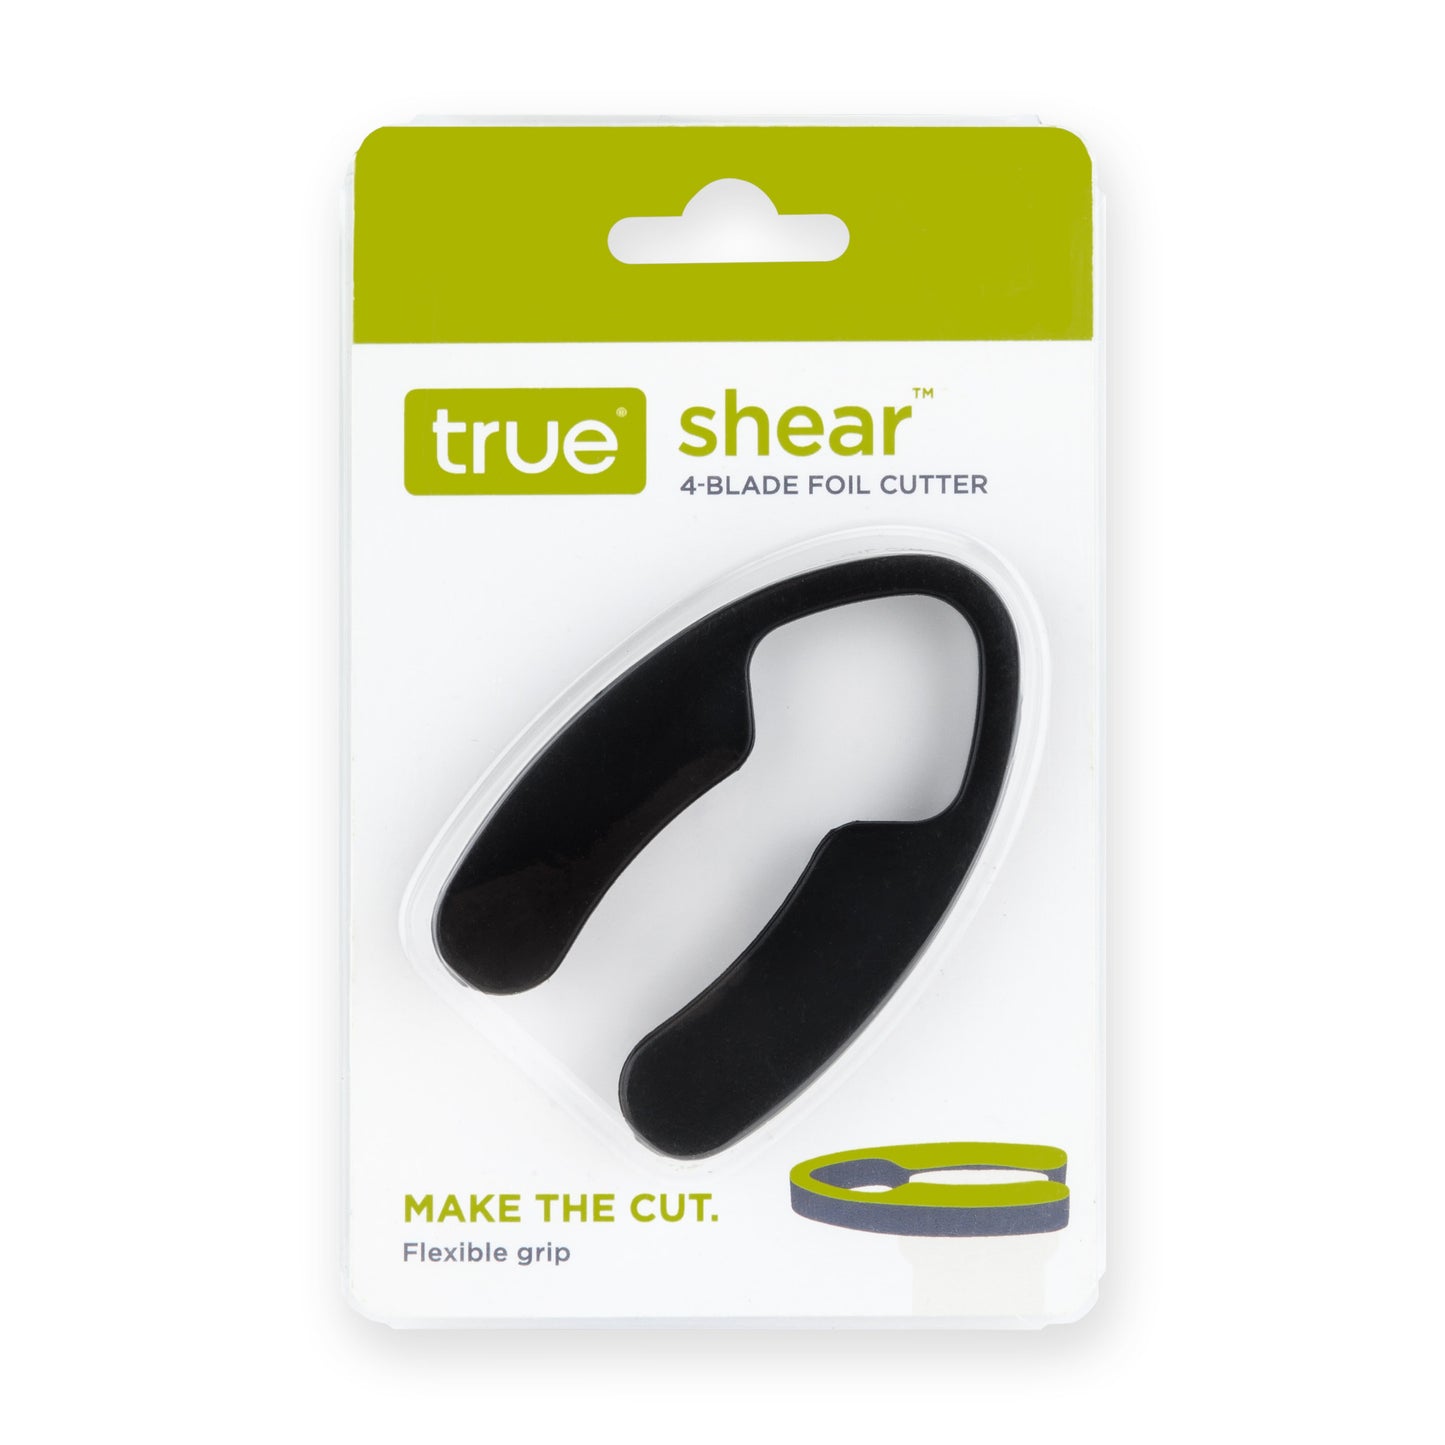 Shear™: 4-Blade Foil Cutter